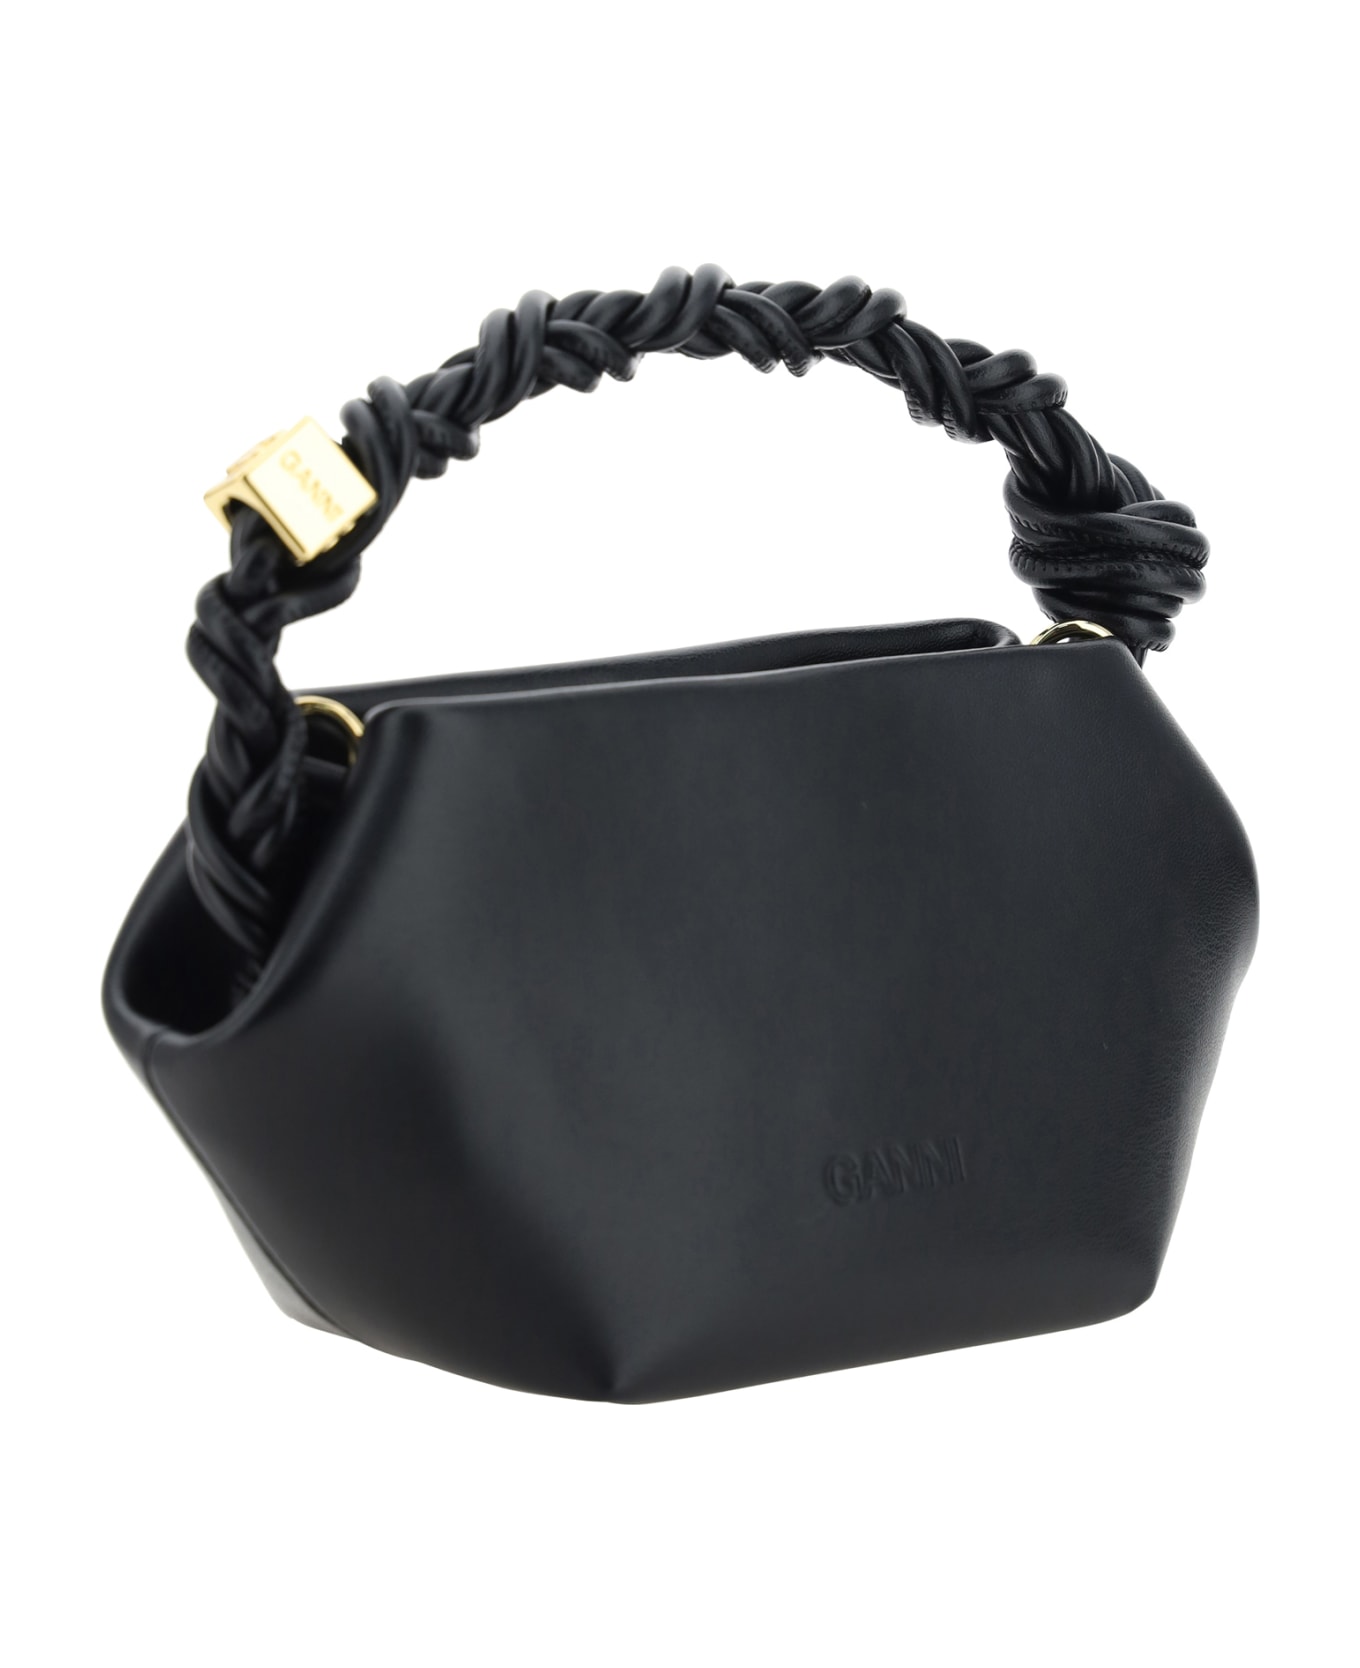 Ganni Mini Bou Handbag - Black